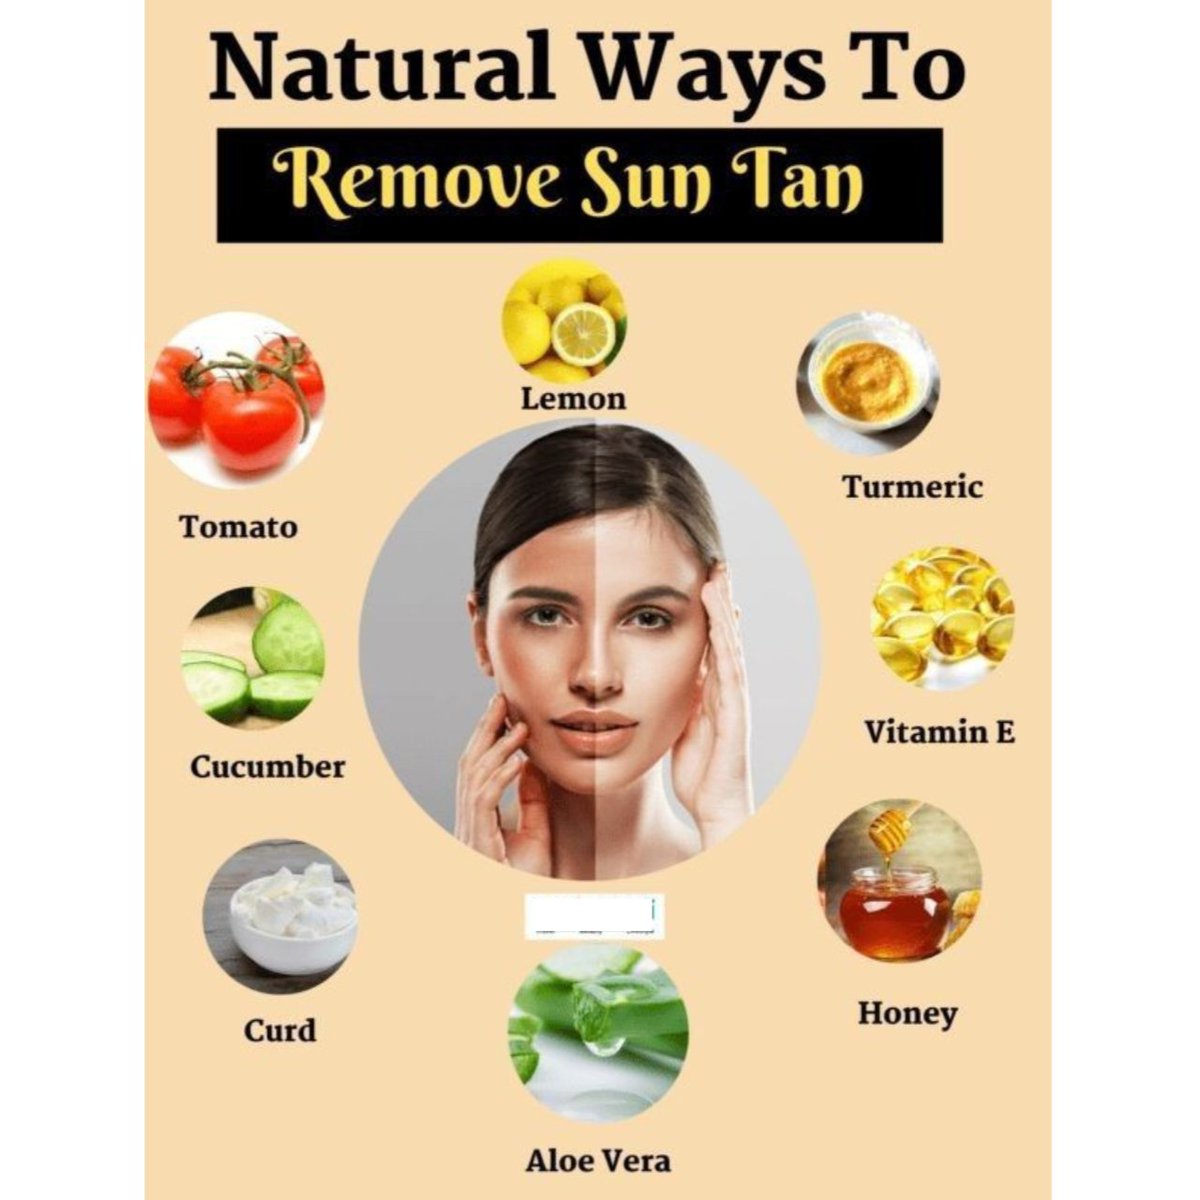 Natural Ways To Remove Sun Tan || Natural Skincare.

#SkinitMade #skincare #Skin #NaturalBeauty #NaturalWonders #natural #naturalskincare